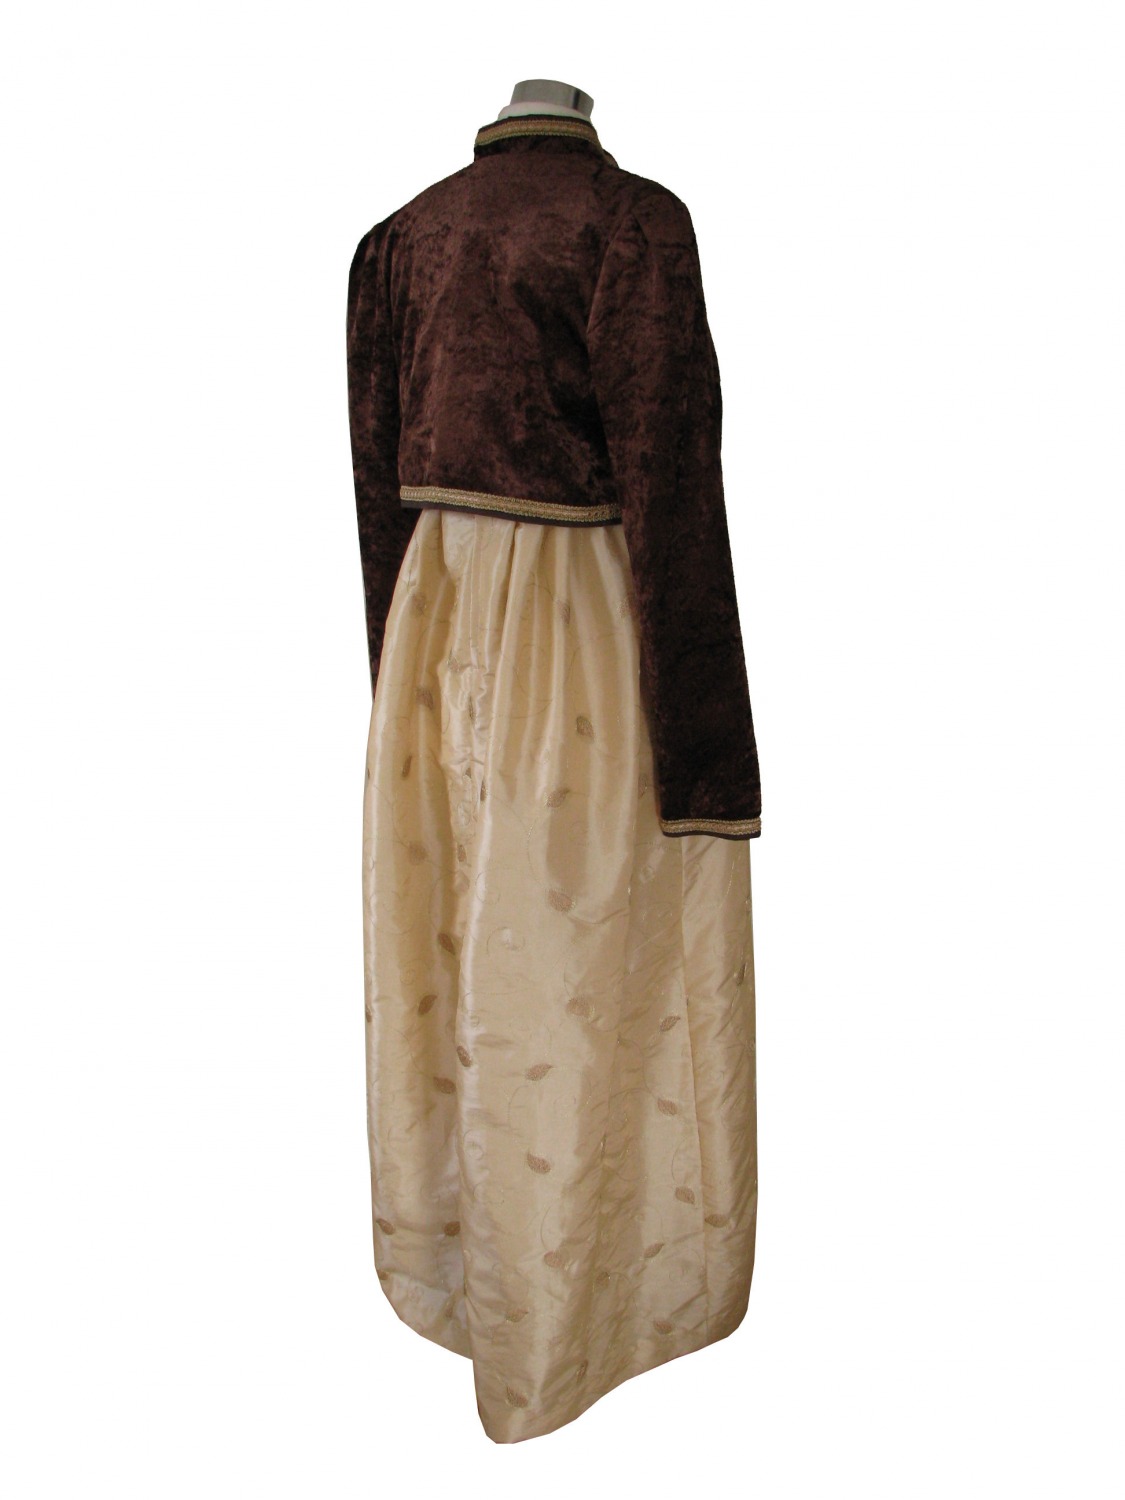 Ladies 19th Century Jane Austen Regency Day Evening Costume Size 12 - 14 Image